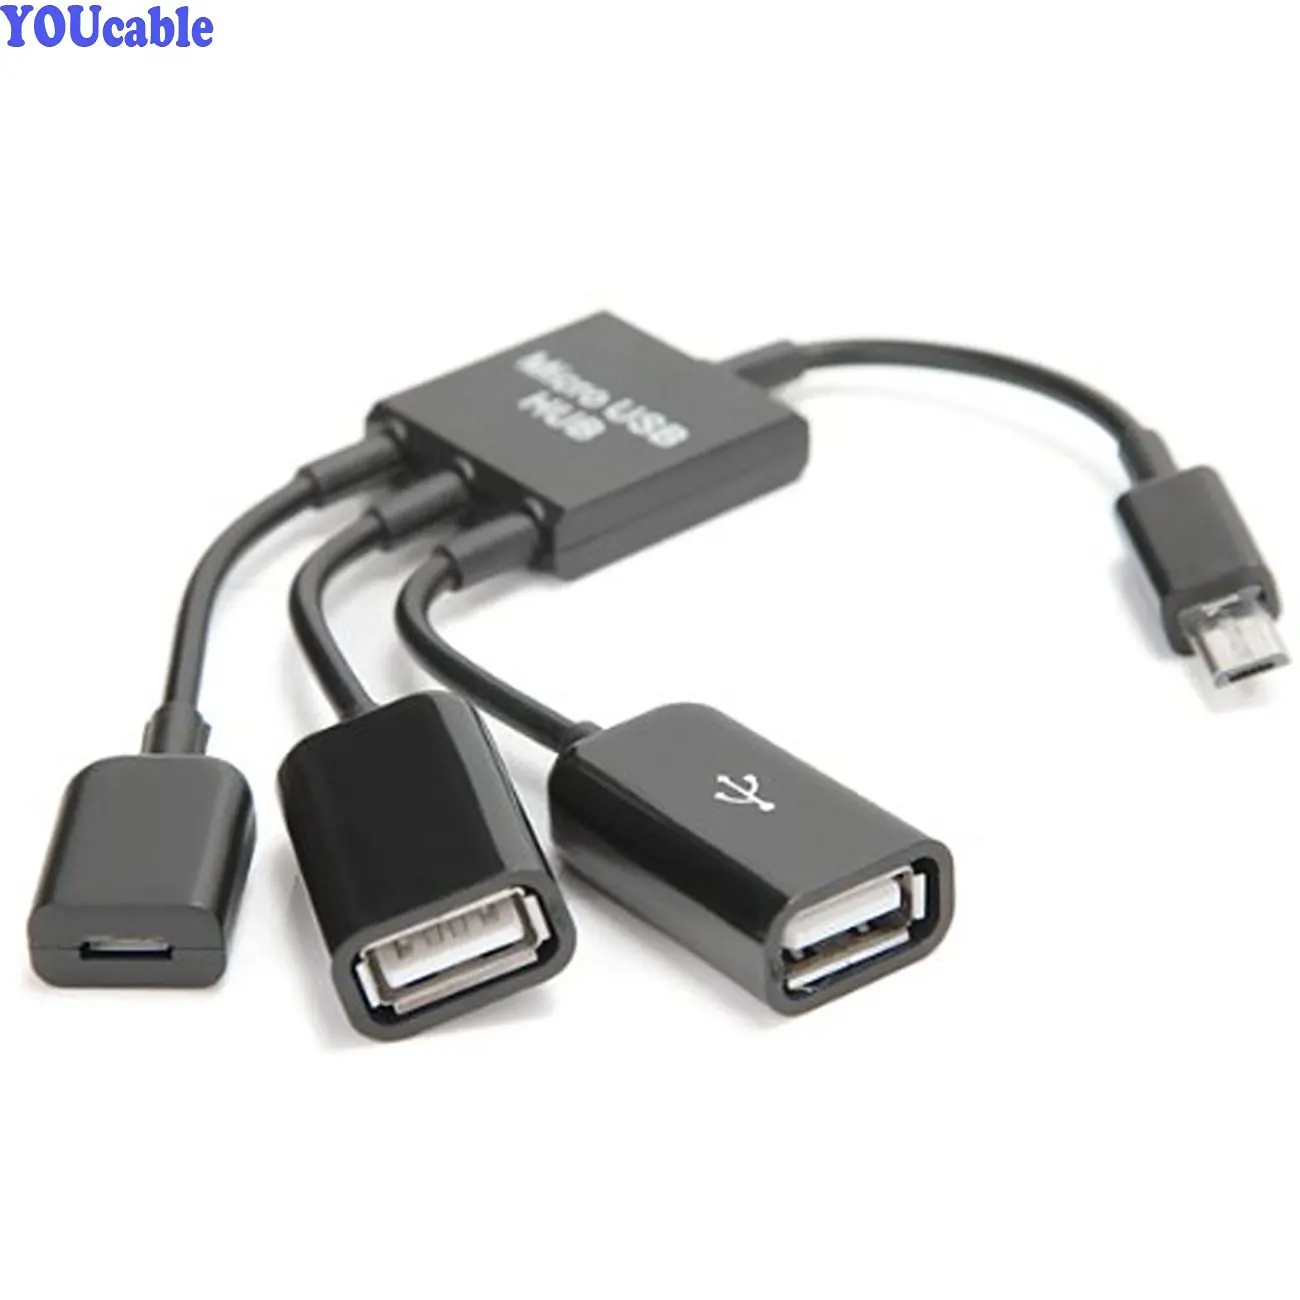 Днс usb c. Разветвитель OTG USB -2 Micro USB. Хаб разветвитель OTG Micro USB USB. Концентратор сплиттер кабель хост OTG Micro 2 x USB пау. Кабель переходник хаб OTG Micro USB Hub, 4 порта 3 x USB, 1 X питание зарядка.